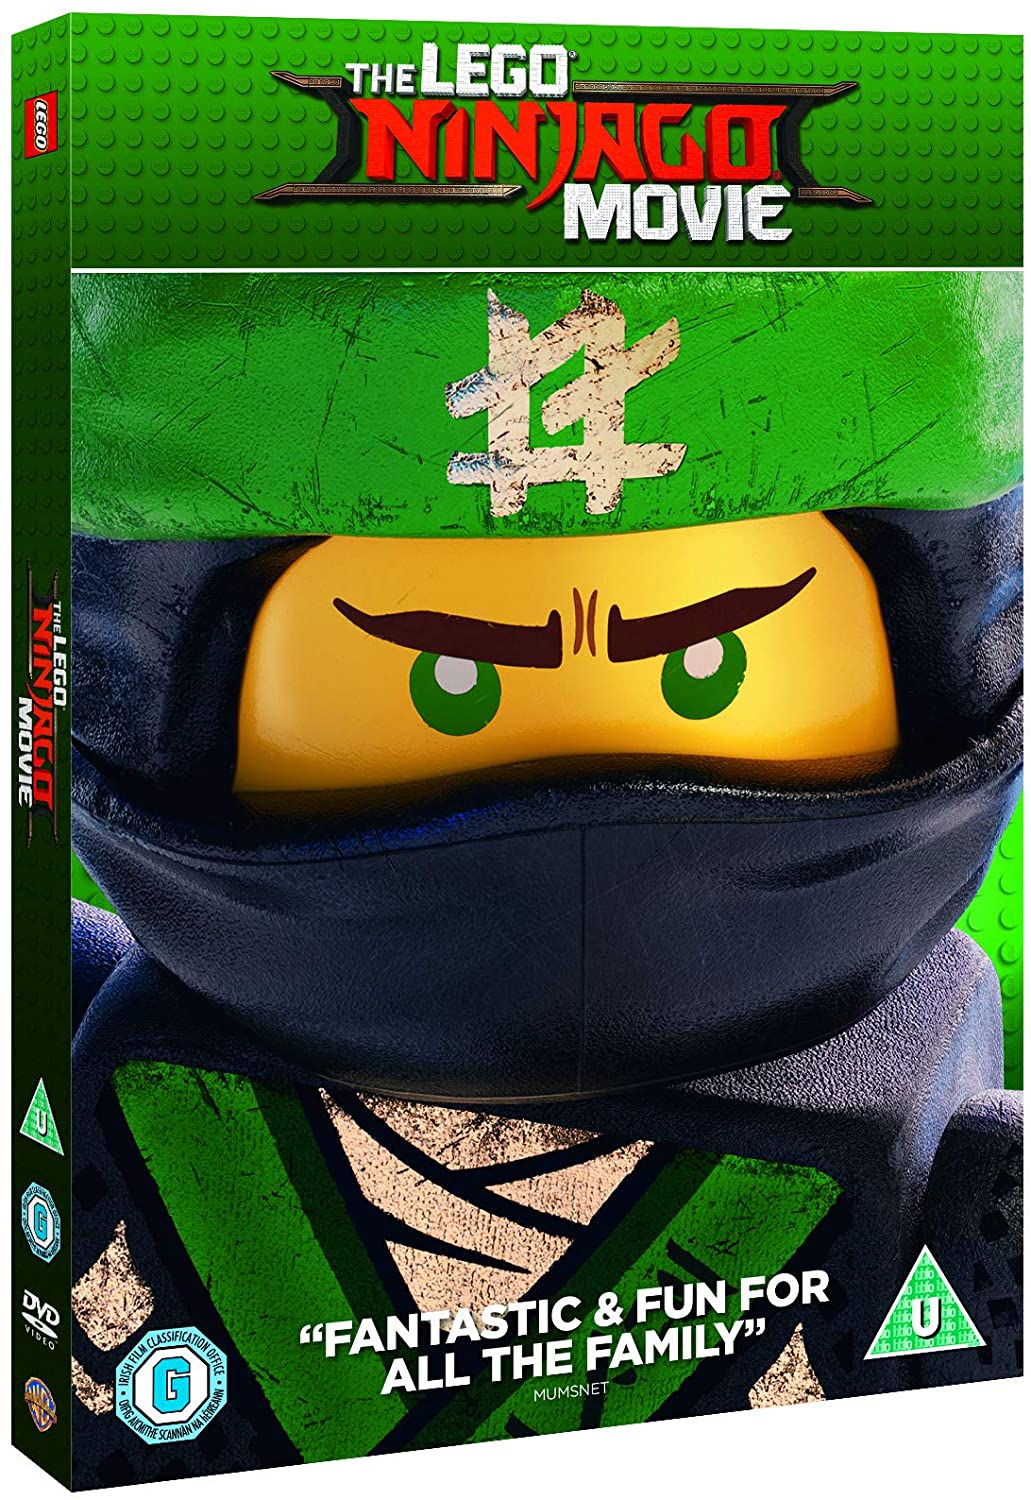 The LEGO Ninjago Movie [DVD]